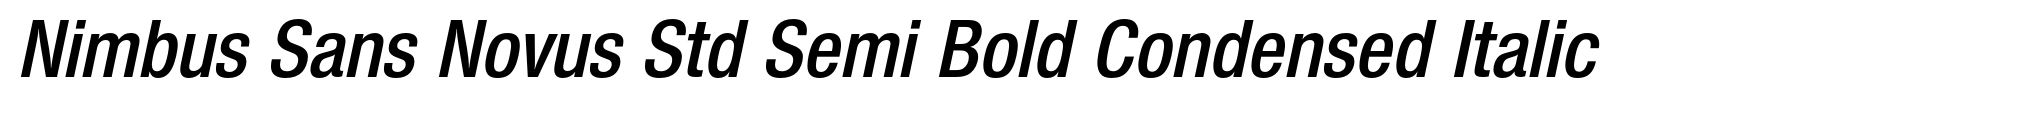 Nimbus Sans Novus Std Semi Bold Condensed Italic image